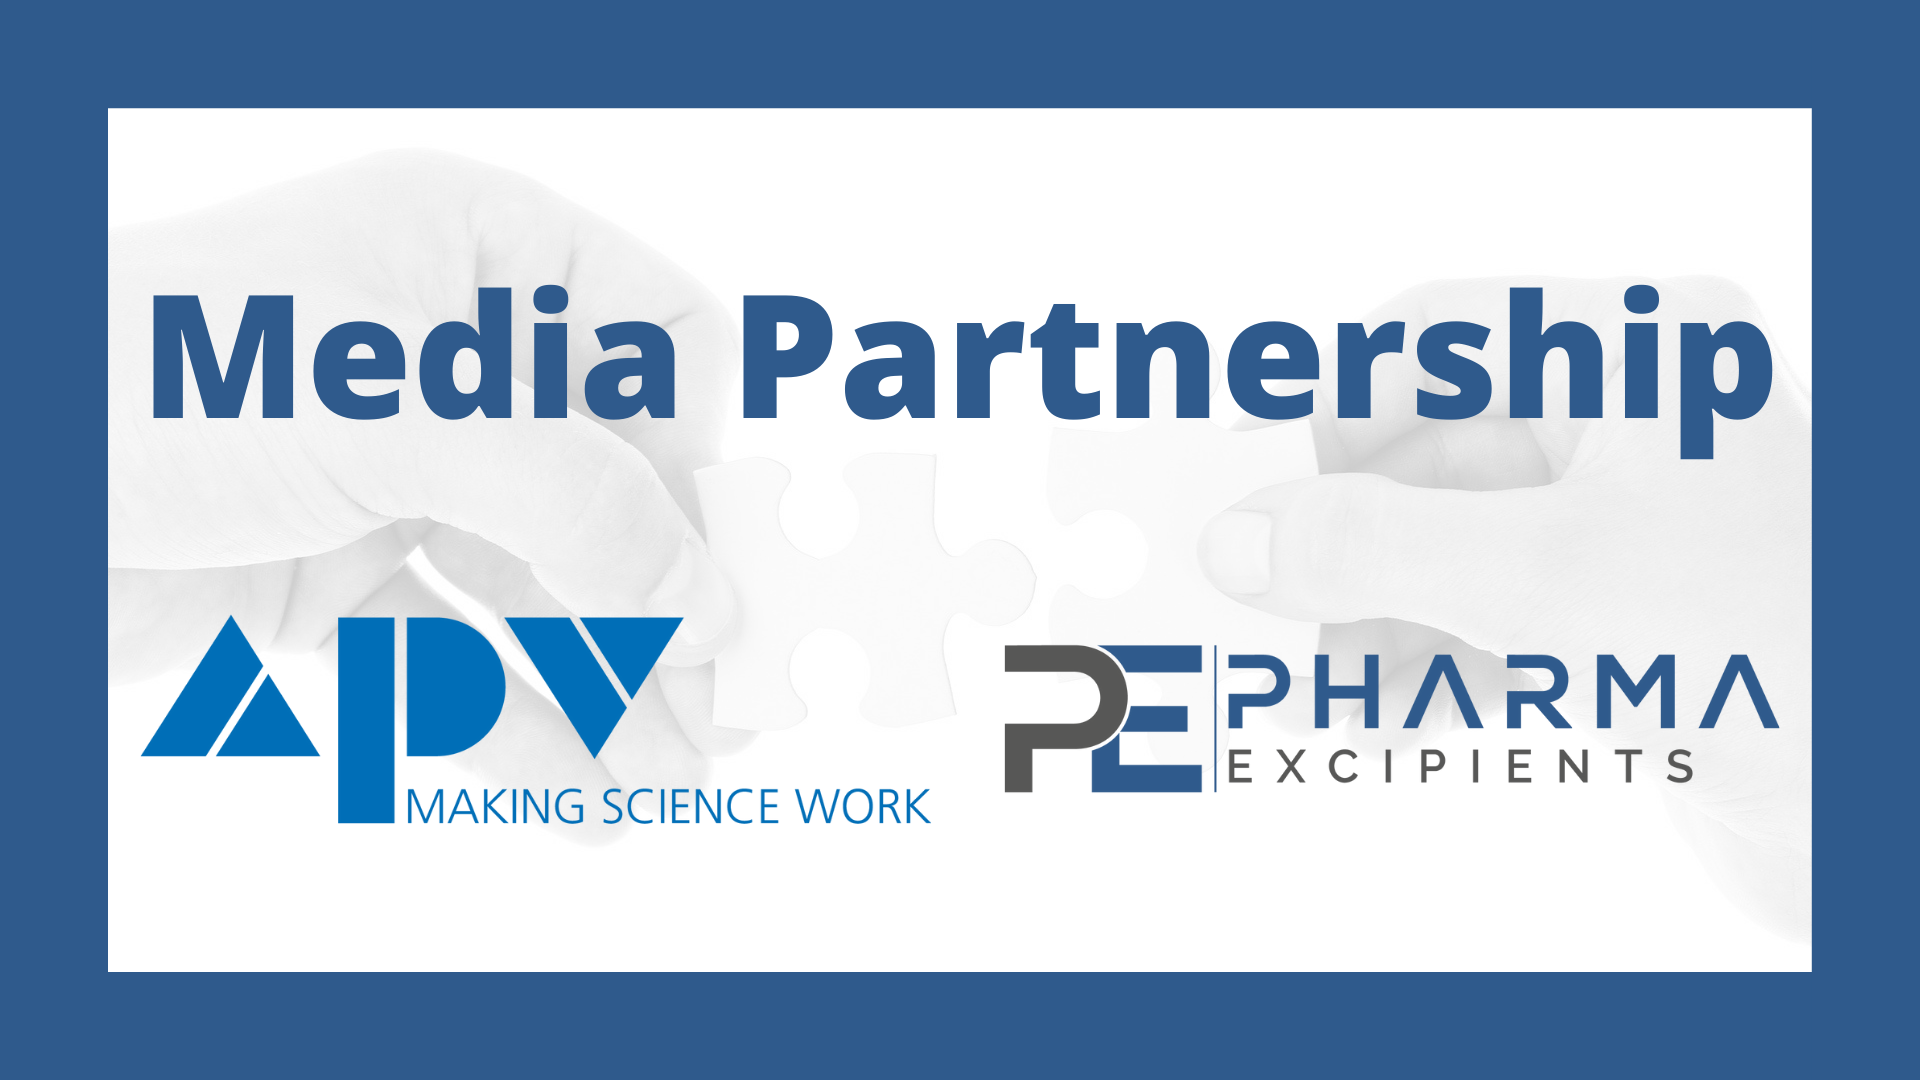 Media Partnership APV and Pharma Excipients